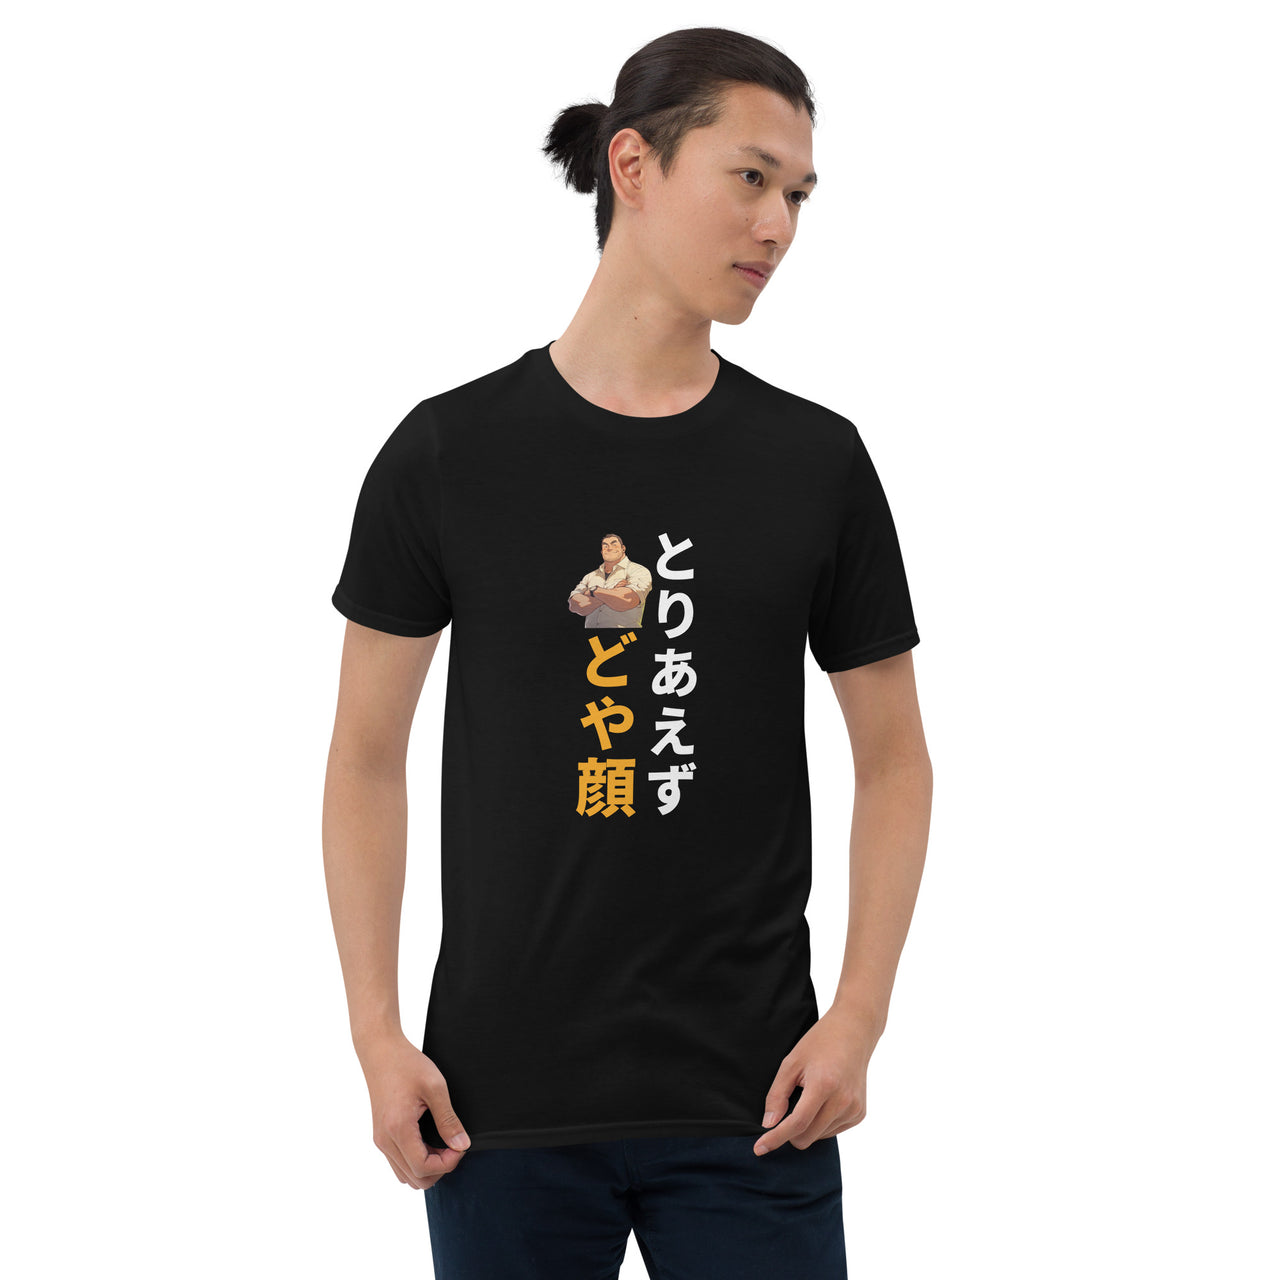 The Smug Look in Japanese Short-Sleeve Unisex T-Shirt